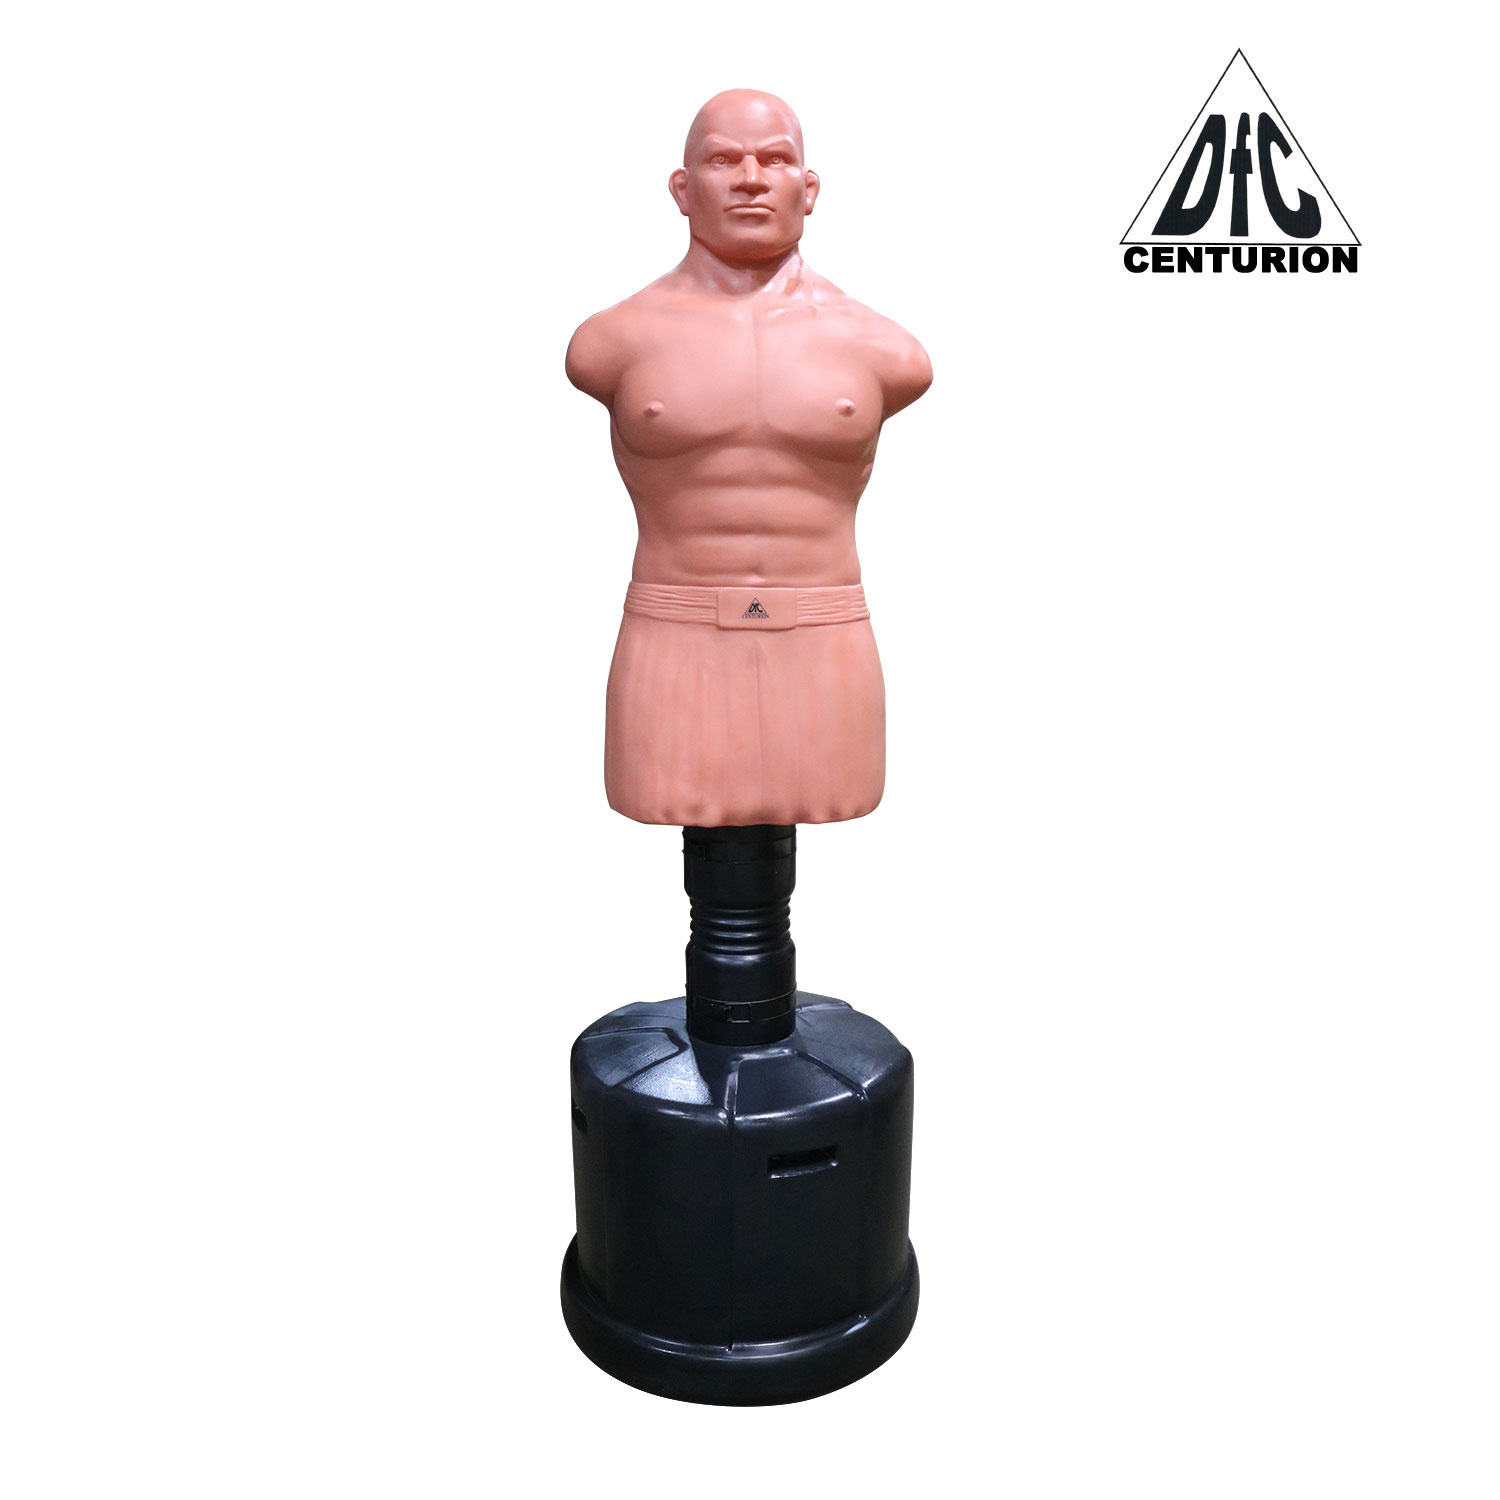 DFC Centurion Boxing Punching Man-Heavy водоналивной - бежевый из каталога боксерских мешков и груш в Самаре по цене 41990 ₽